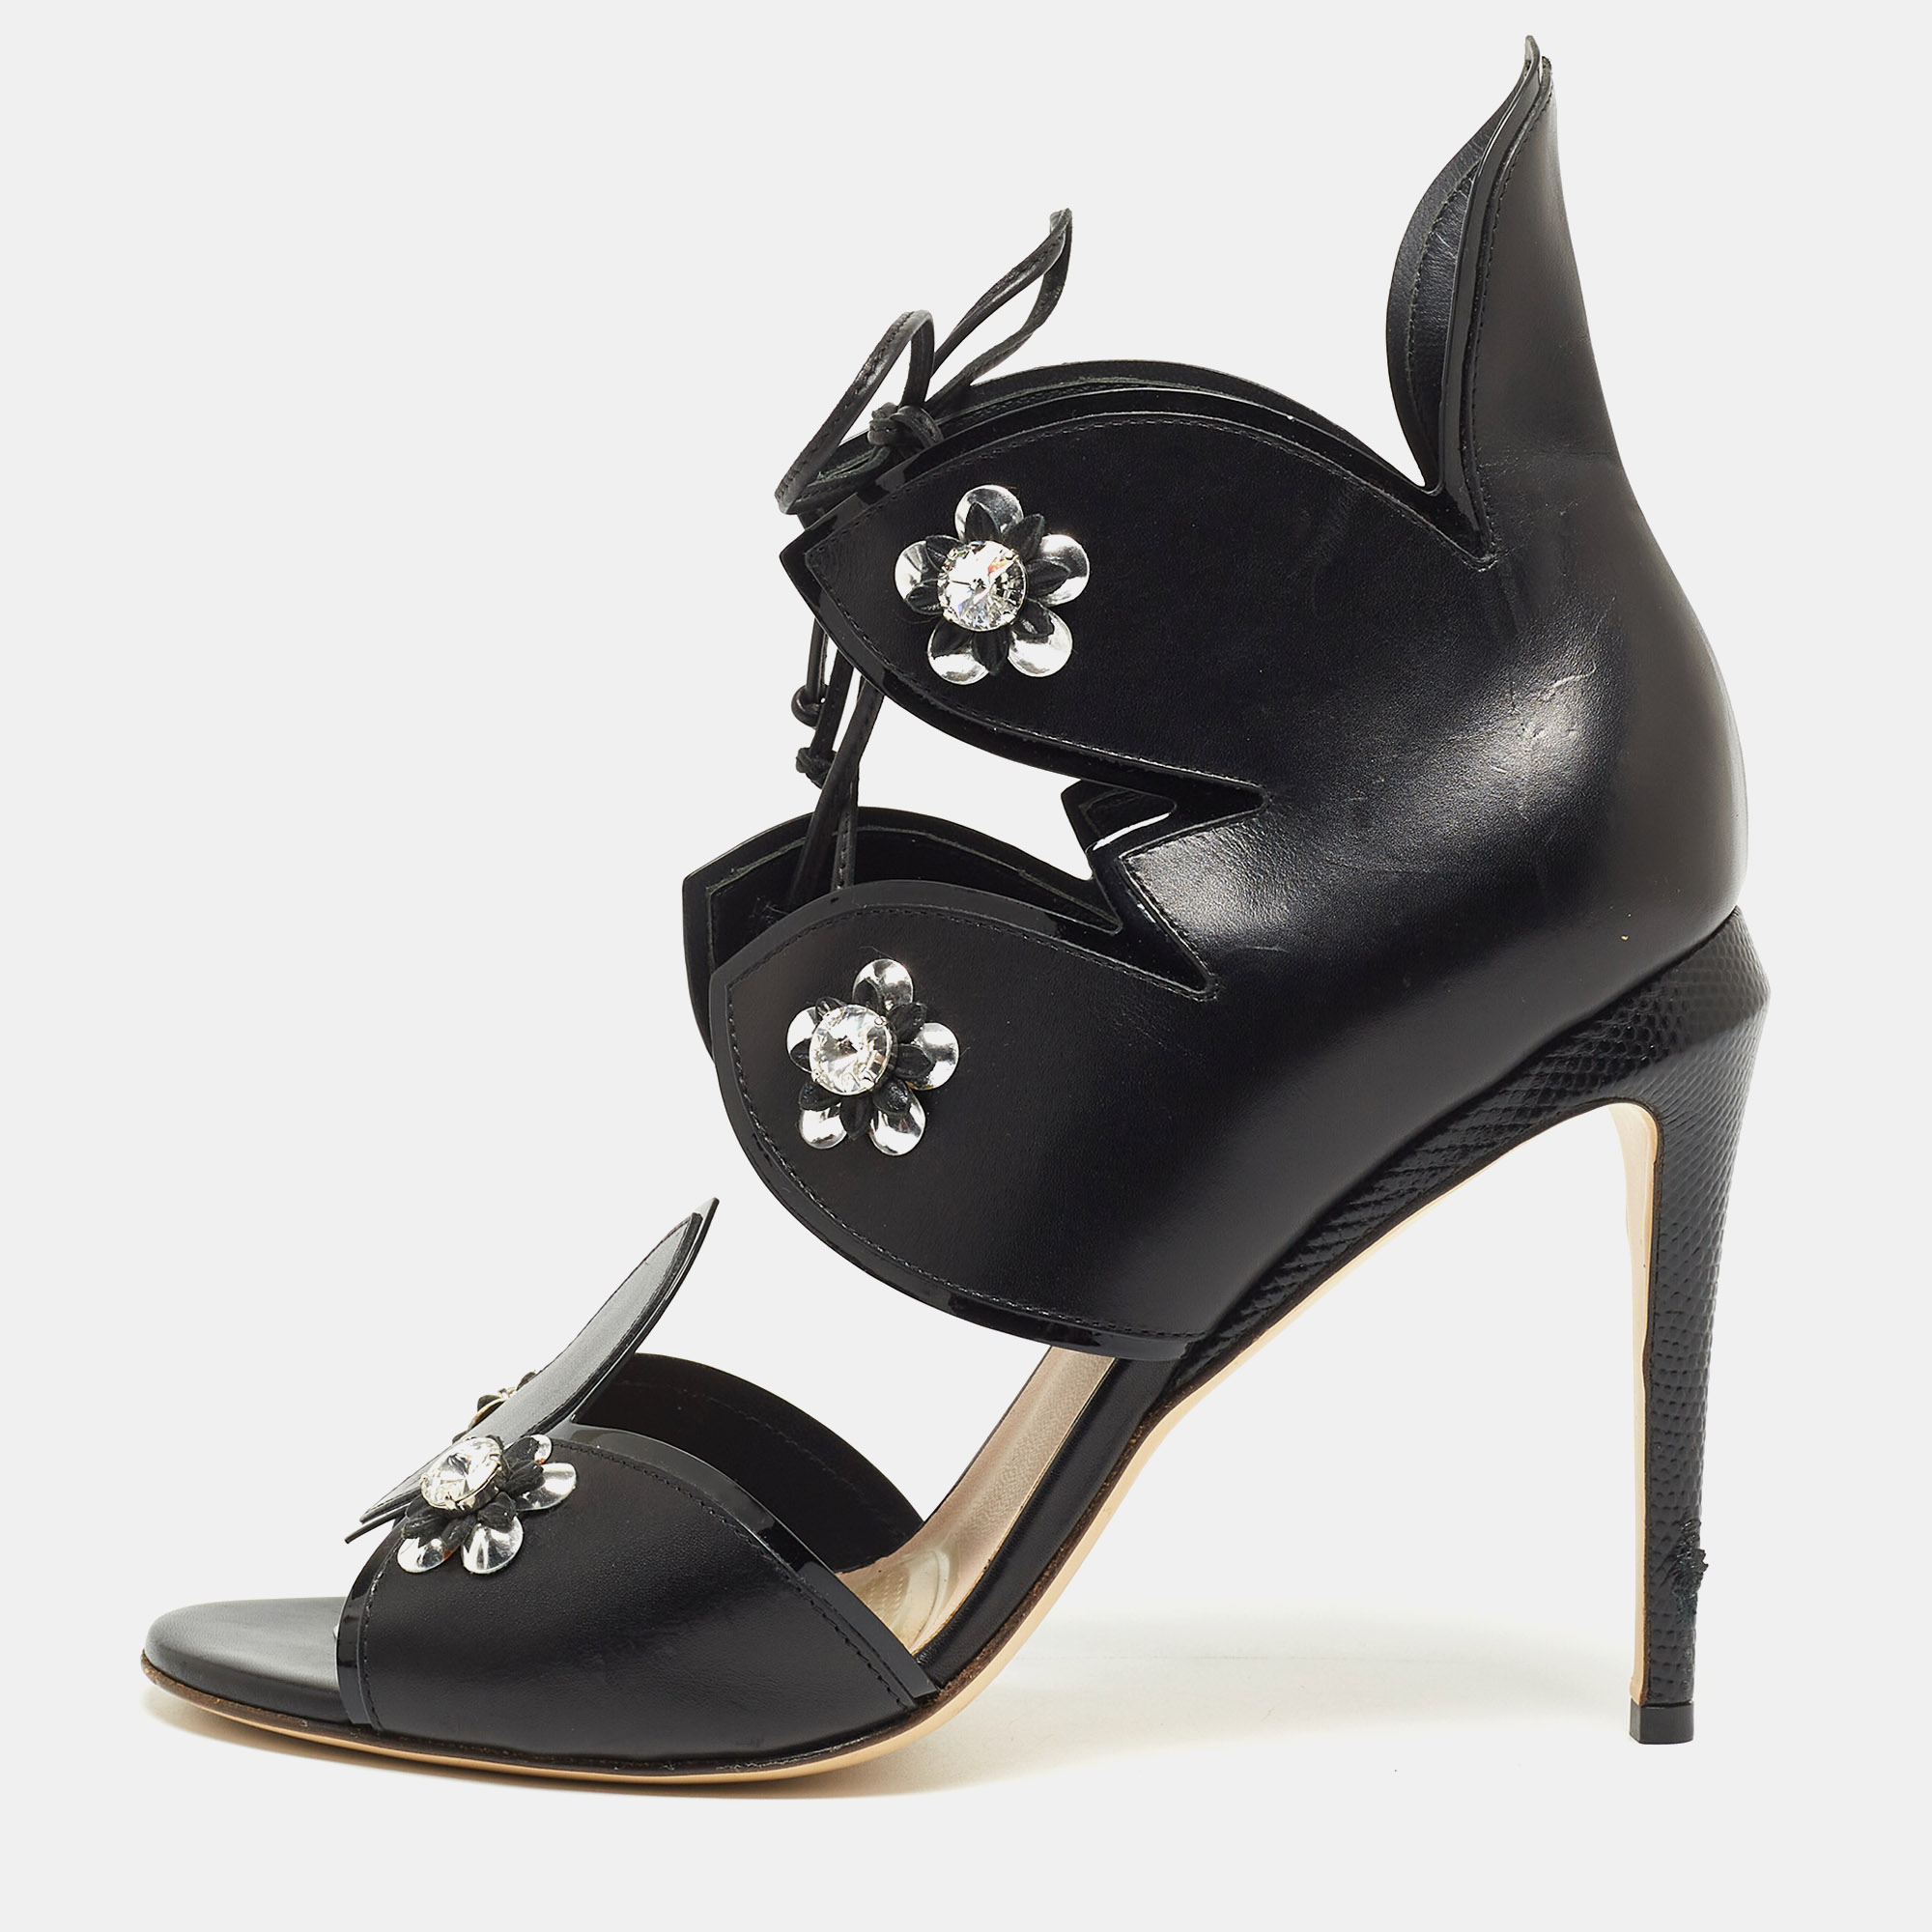 Fendi black leather lace up crystal embellished sandals size 40